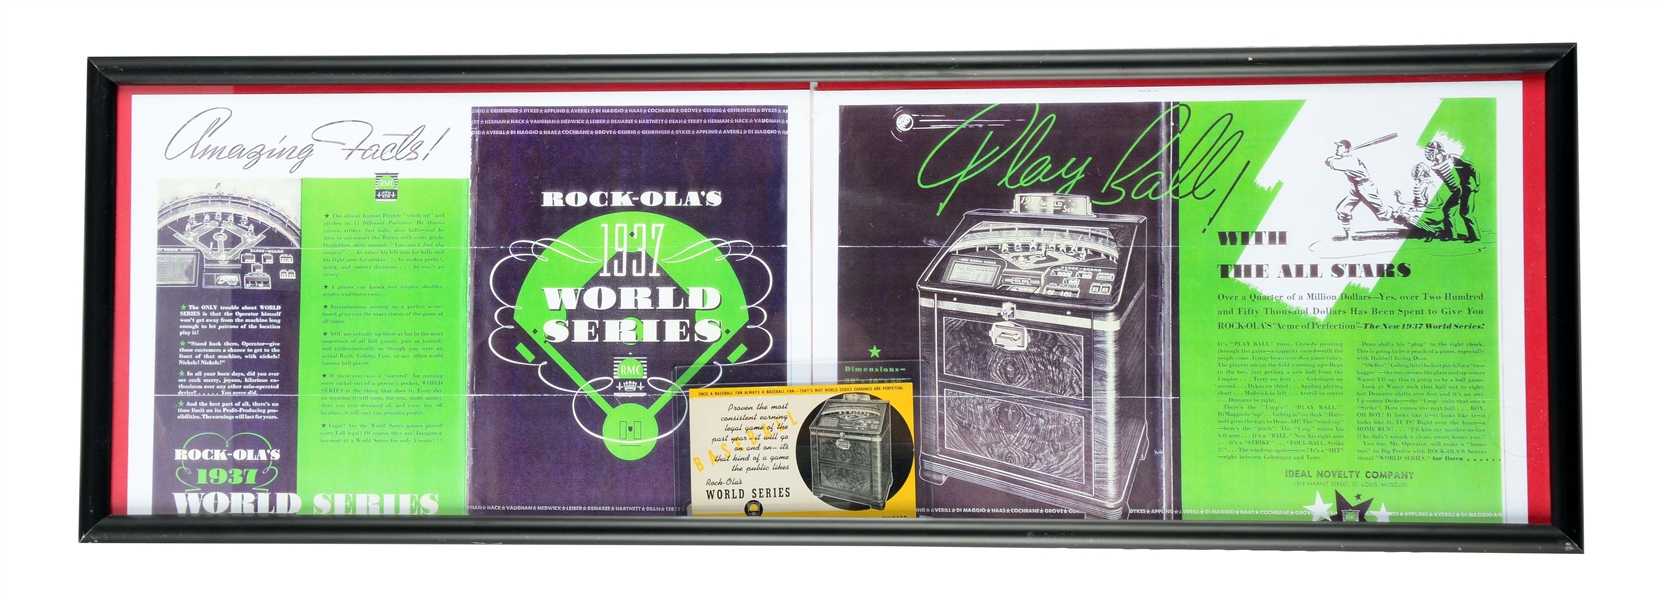 FRAMED PHOTOCOPY OF ROCK-OLA 1937 WORLD SERIES ADVERTISEMENT WITH LAMINATED ROCK-OLA WORLD SERIES CARD.